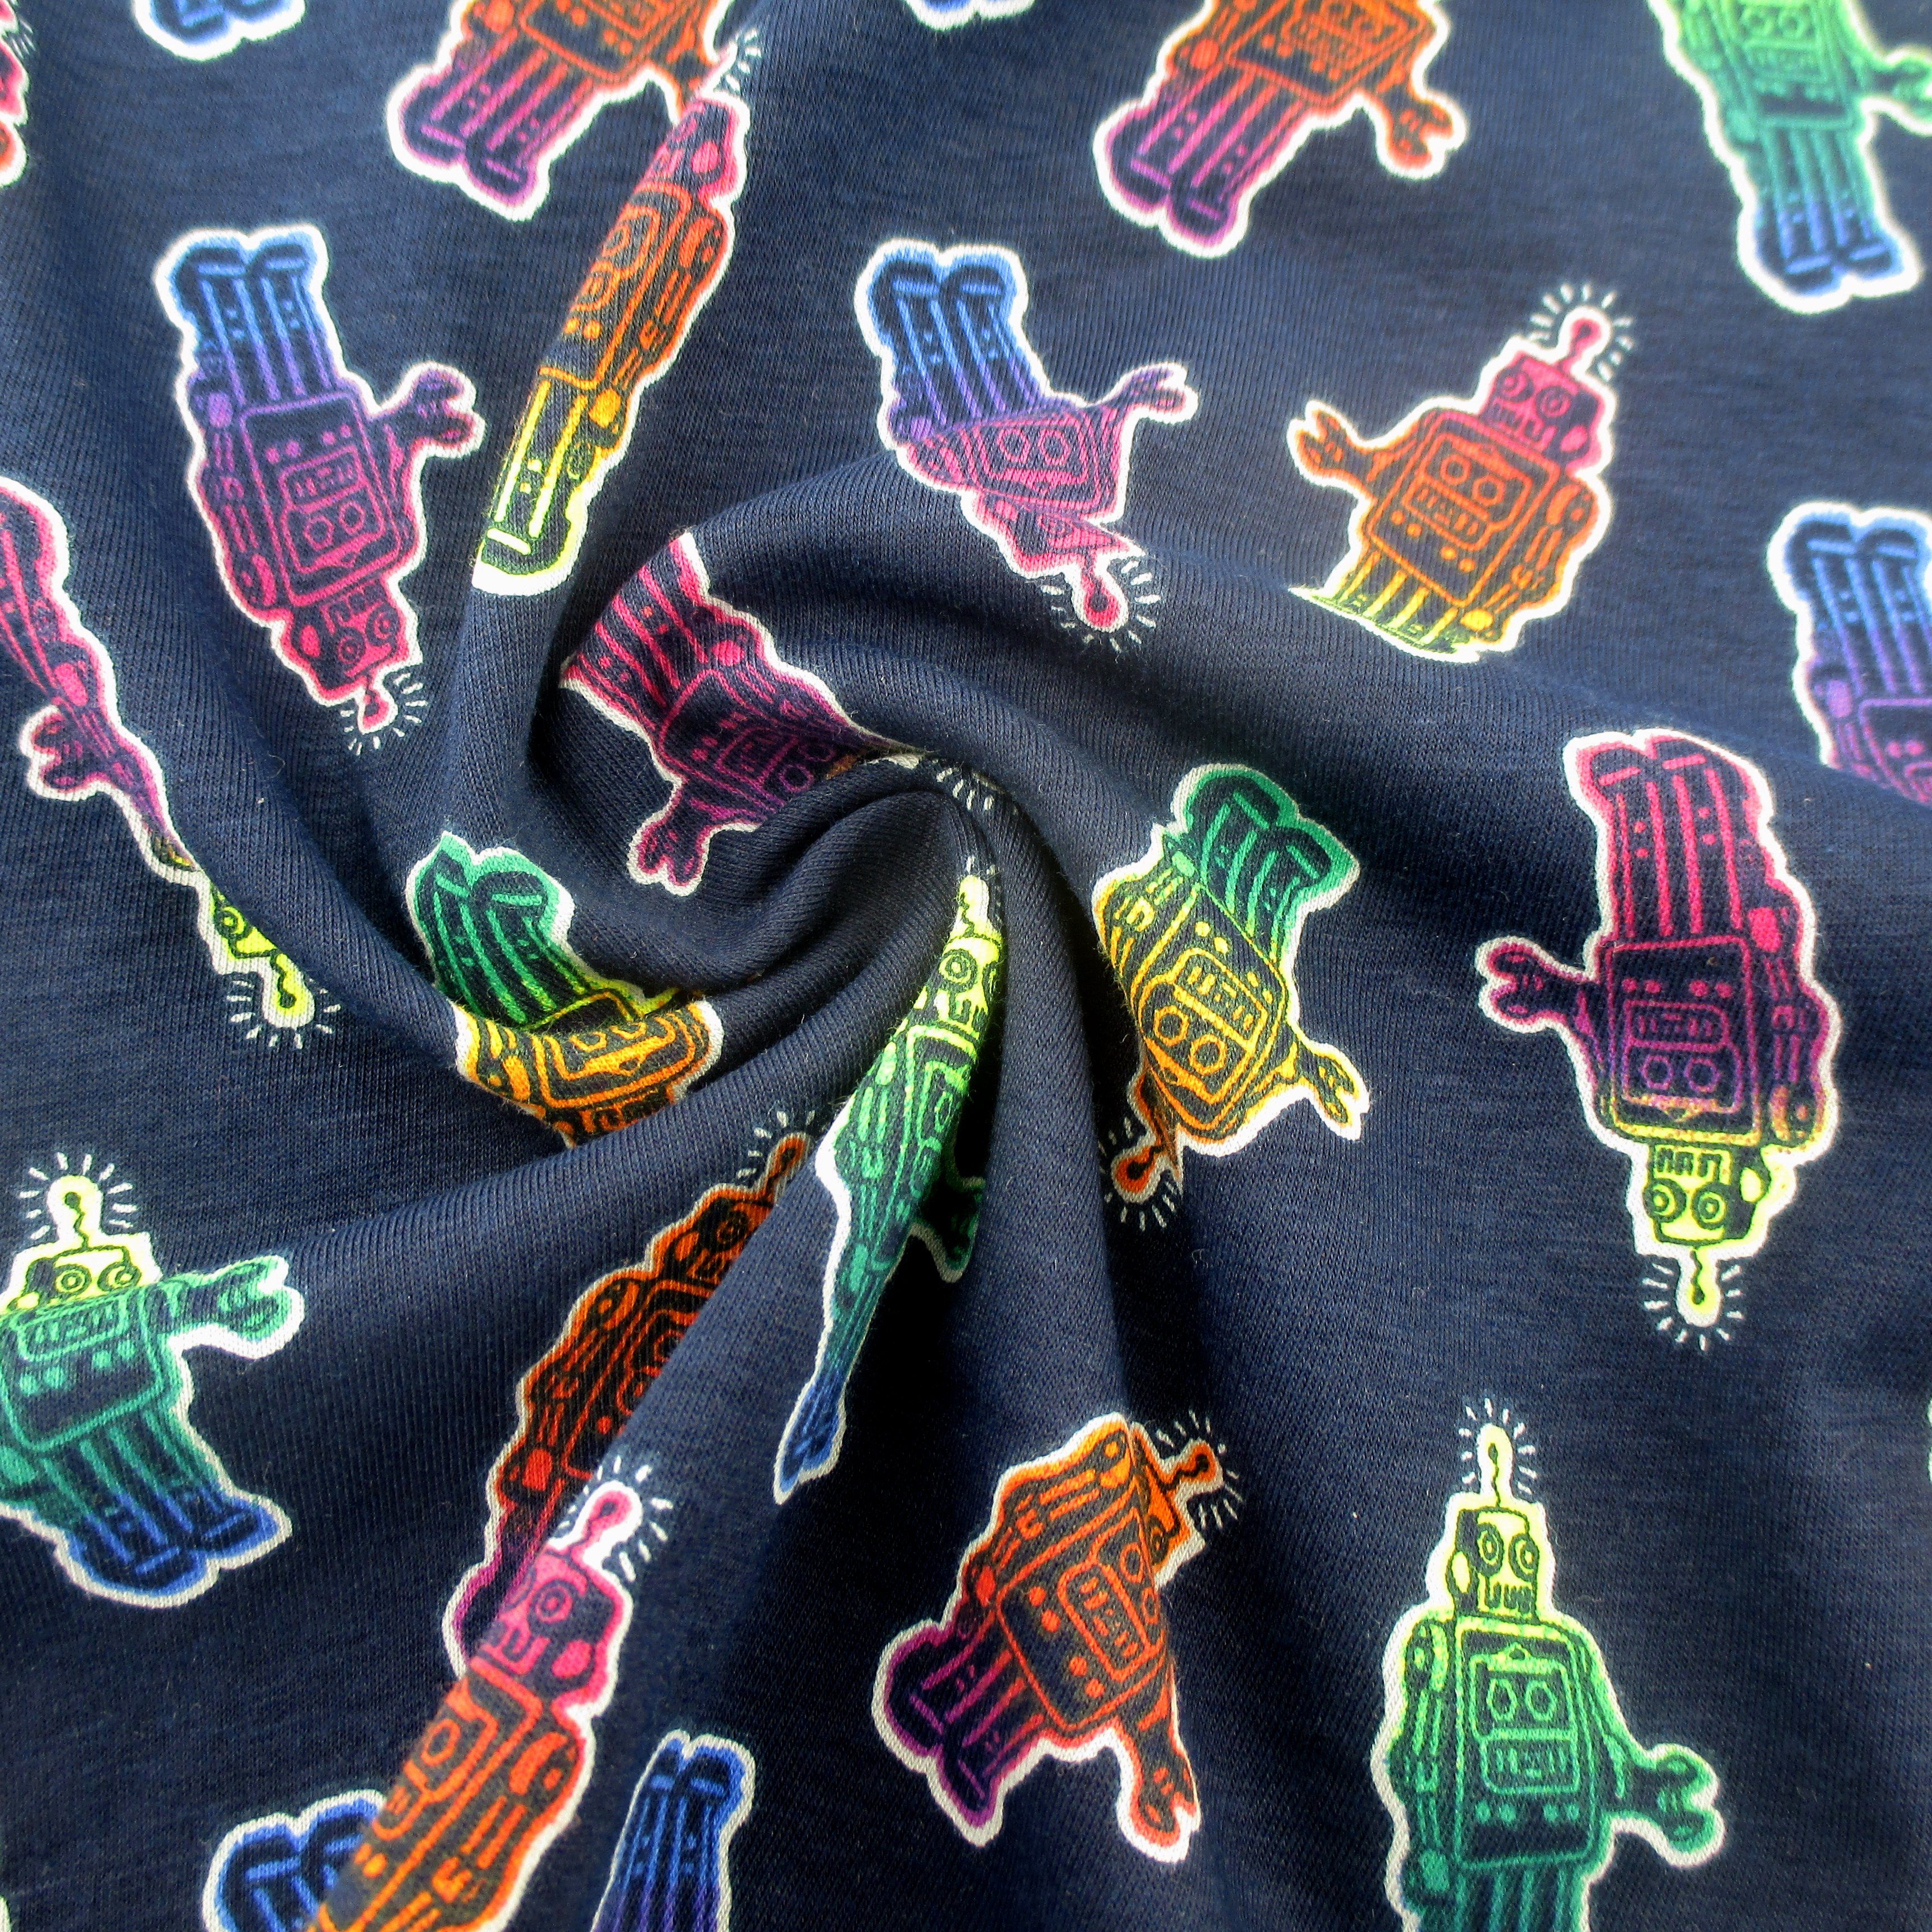 Rainbow Colored Retro Robot Gummies Patterned Short-Sleeve Men's Cotton T-Shirt Top